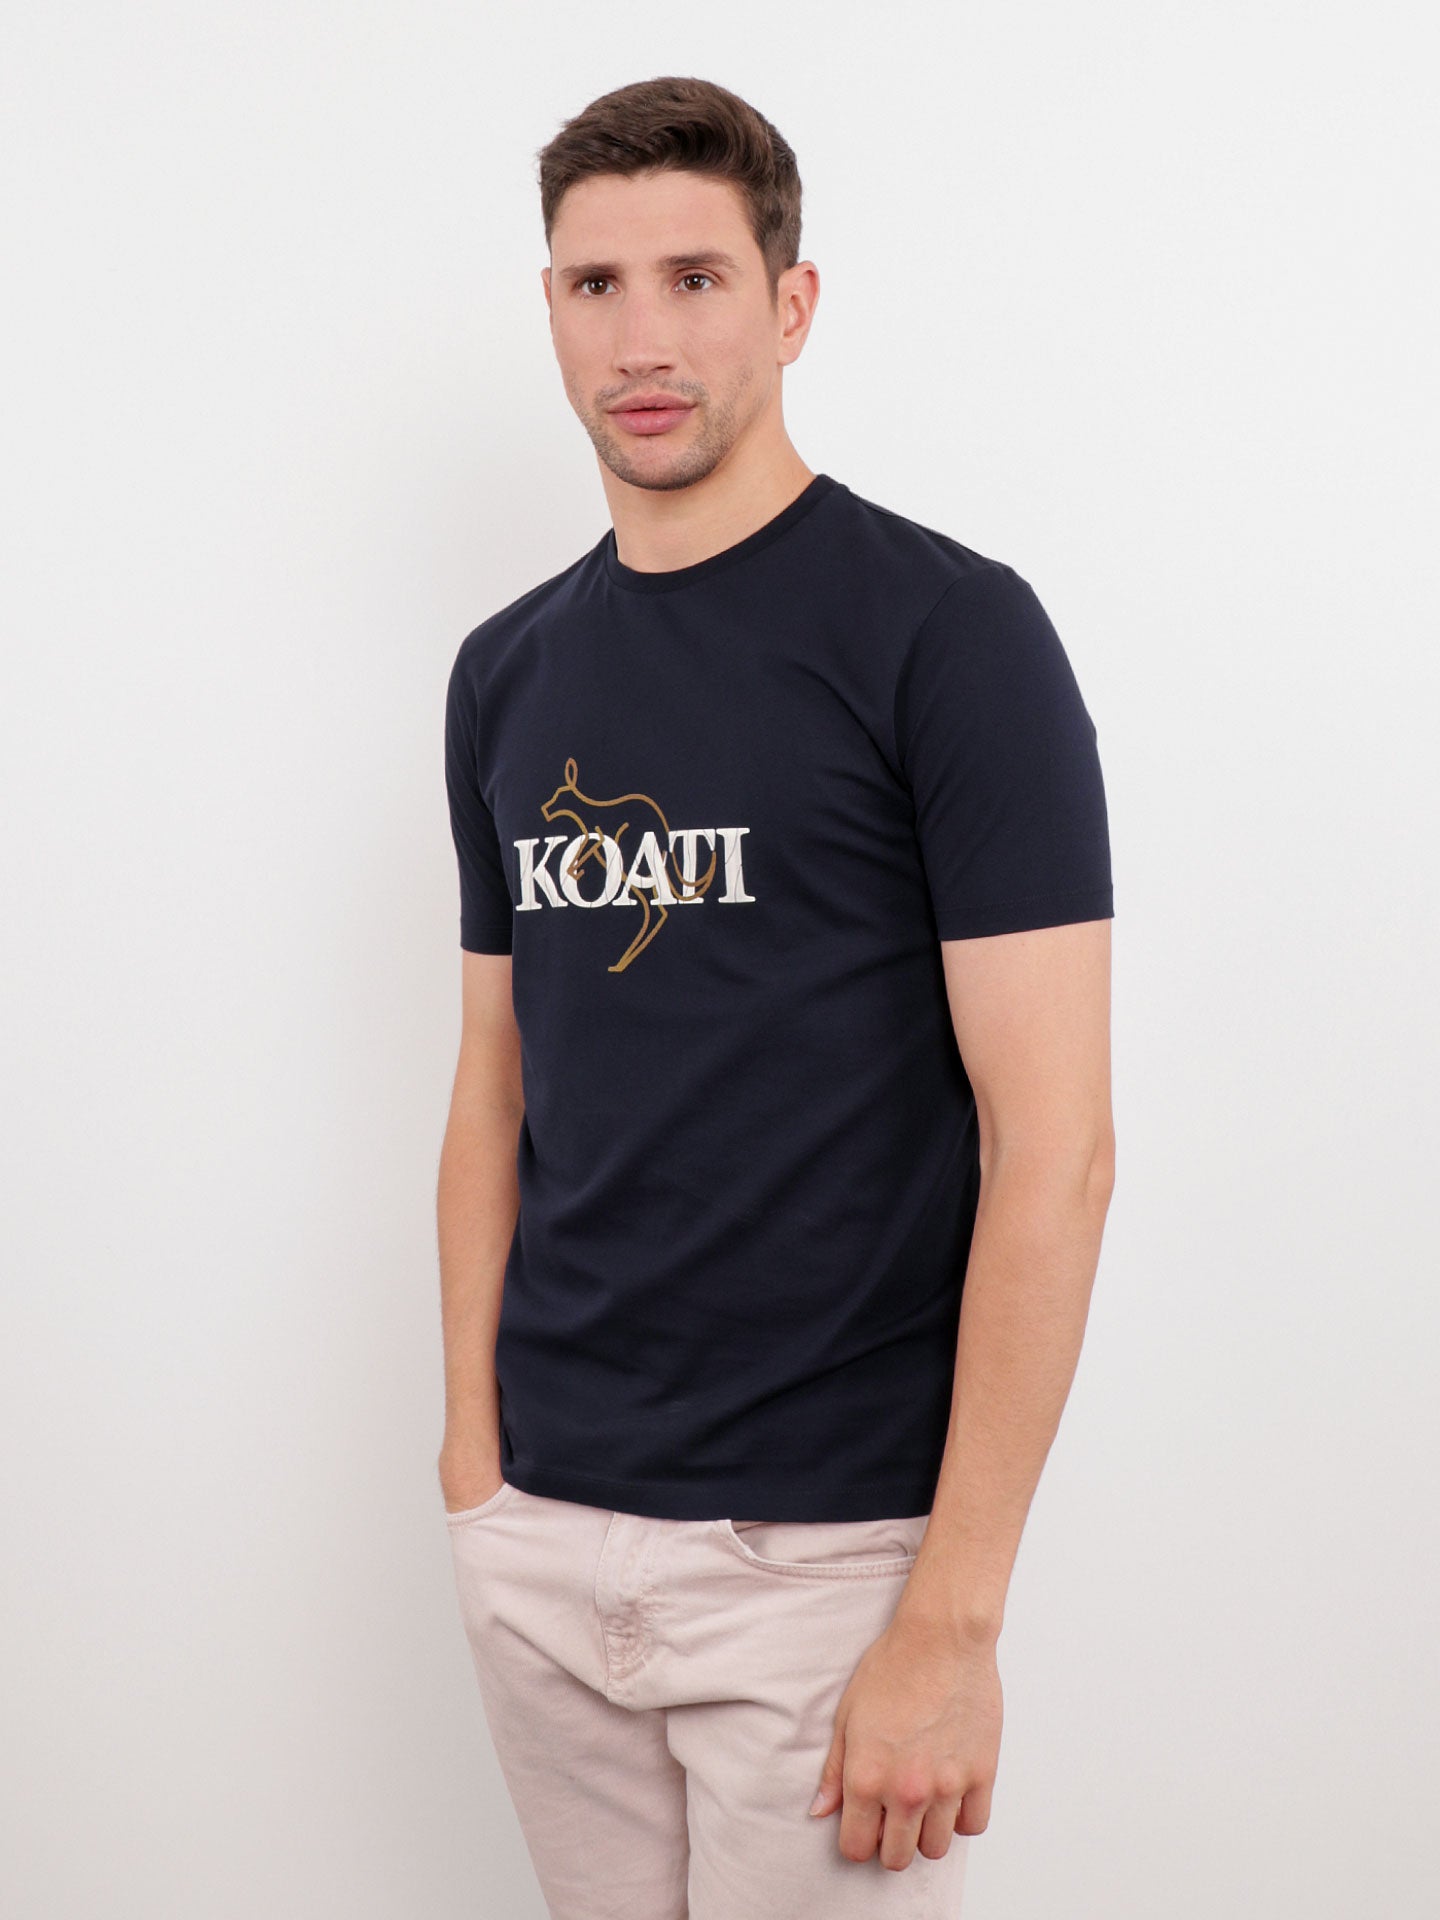 T-Shirt Jersey Estampada Koati Branco 2 Cores